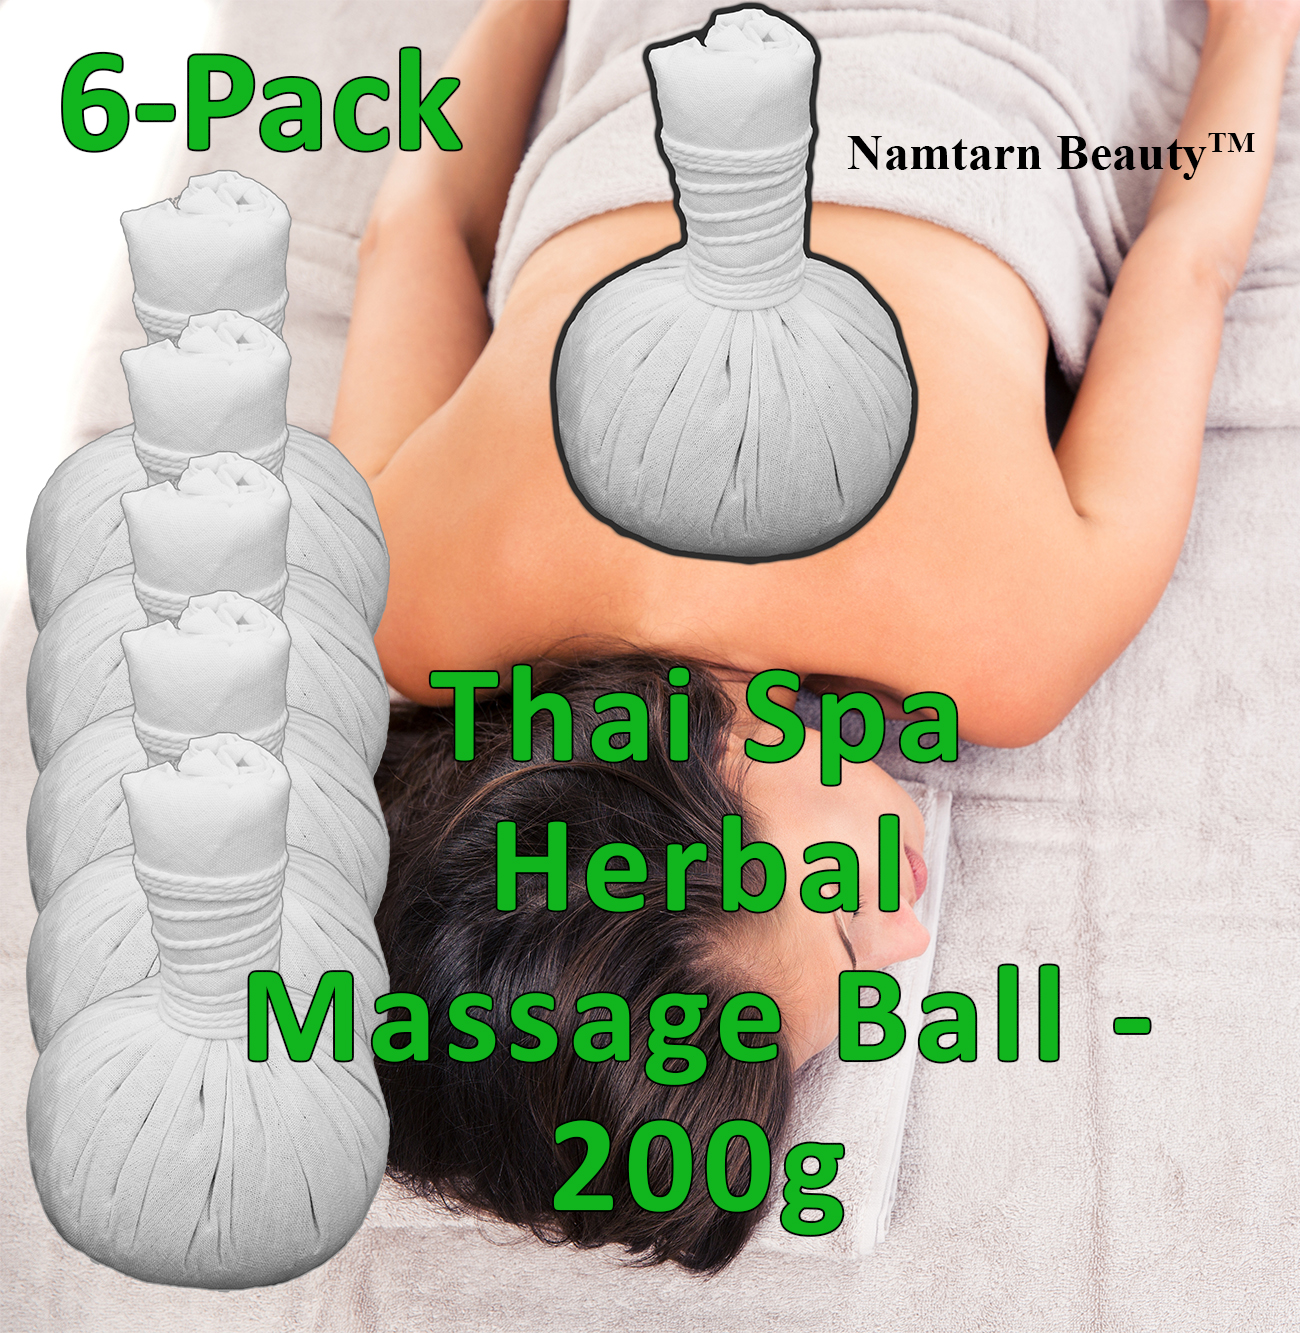 Namtarn Beauty Thai Massage Ball x6 img 1 Woman on Massage Table with product